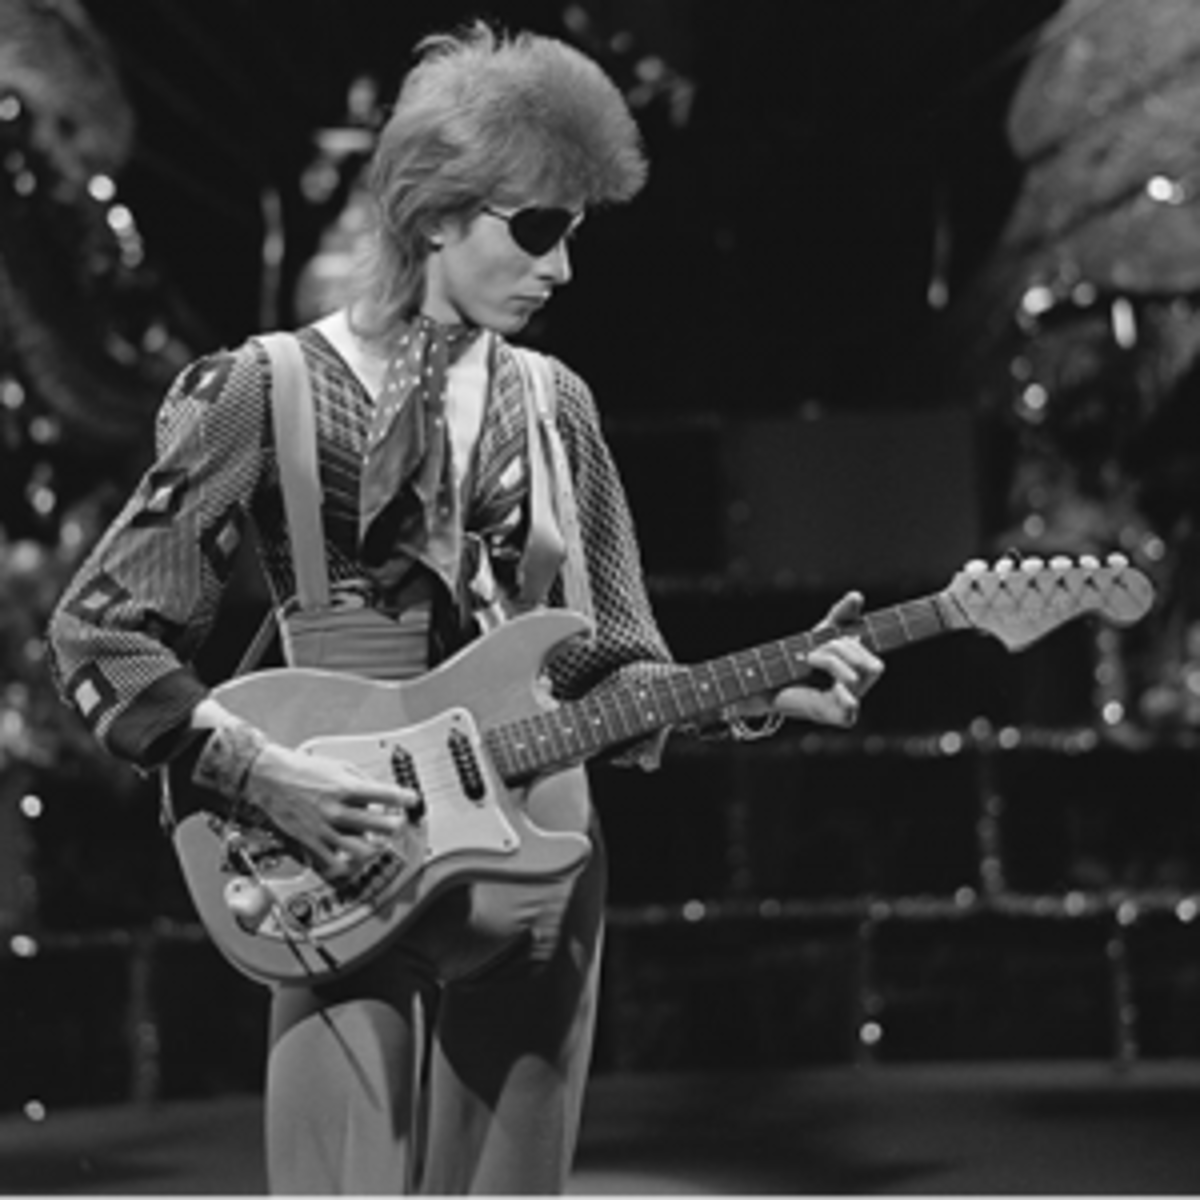 Bowie filming a video for "Rebel Rebel" in 1974. Courtesy of Beeld en Geluid Wiki